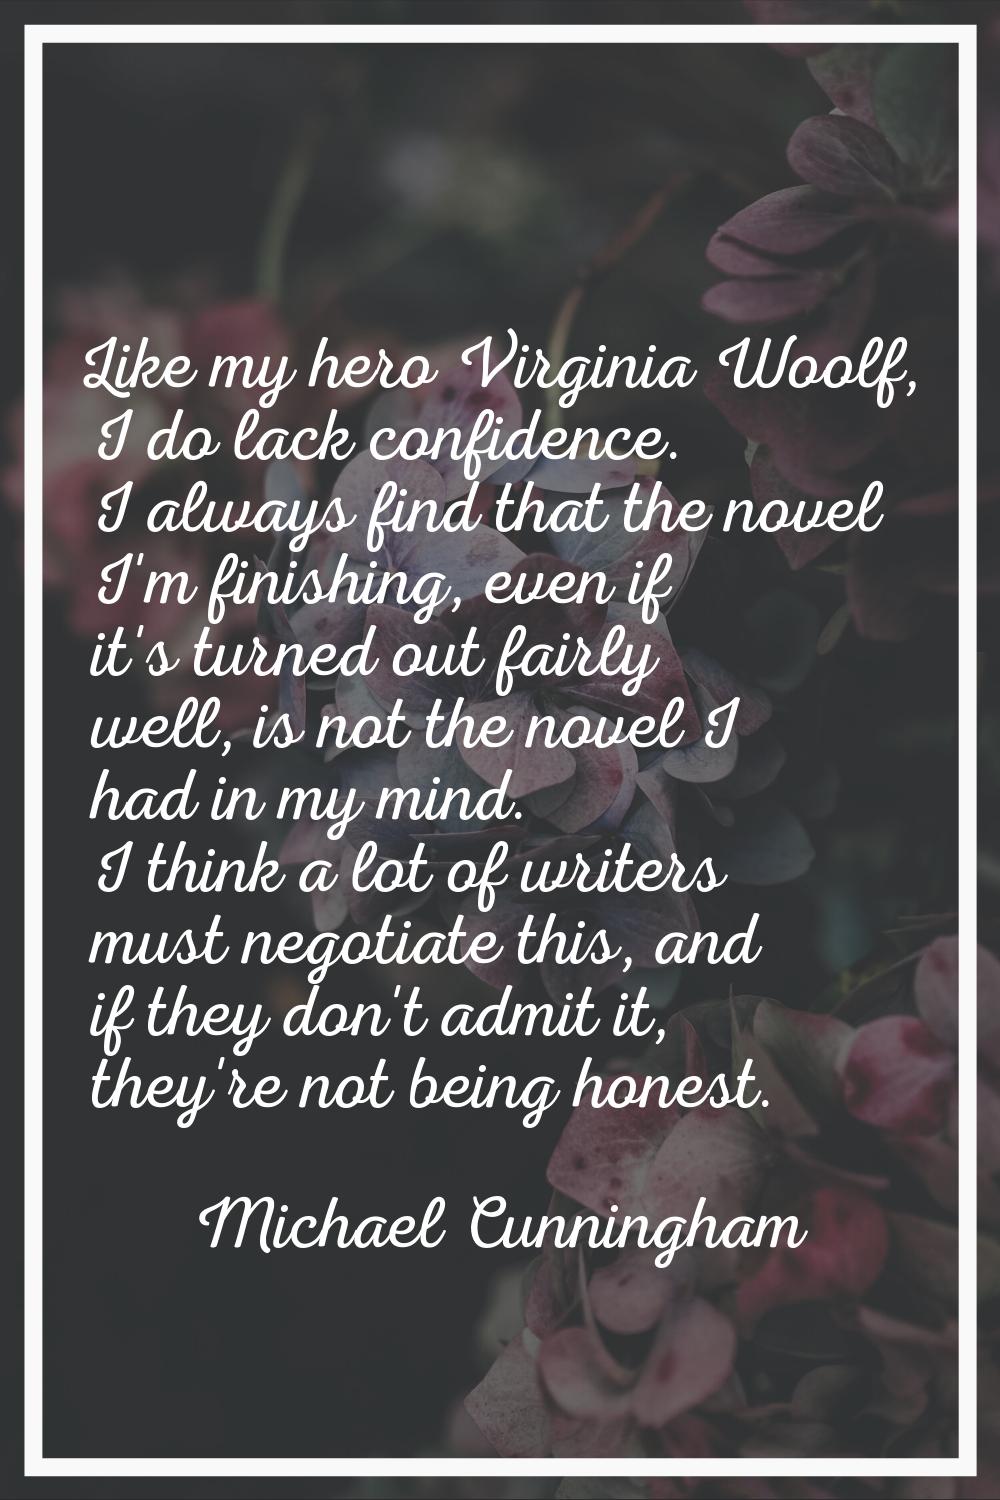 Like my hero Virginia Woolf, I do lack confidence. I always find that the novel I'm finishing, even